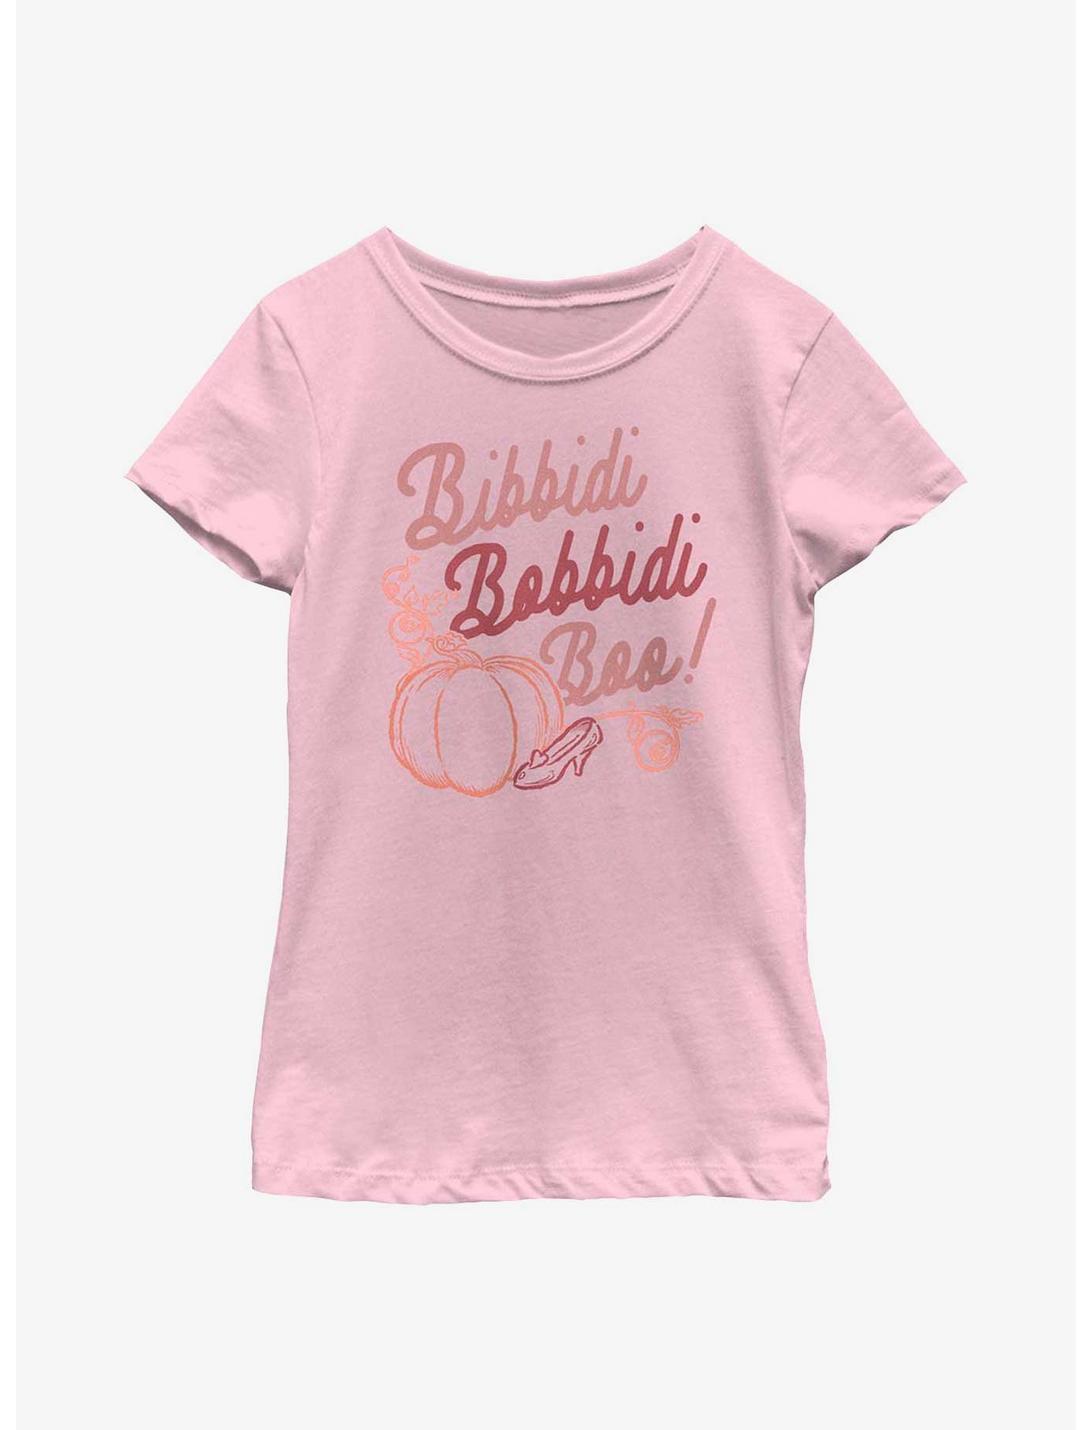 Disney Cinderella Bibbidi Bobbidi Boo! Pumpkin Youth Girls T-Shirt, PINK, hi-res